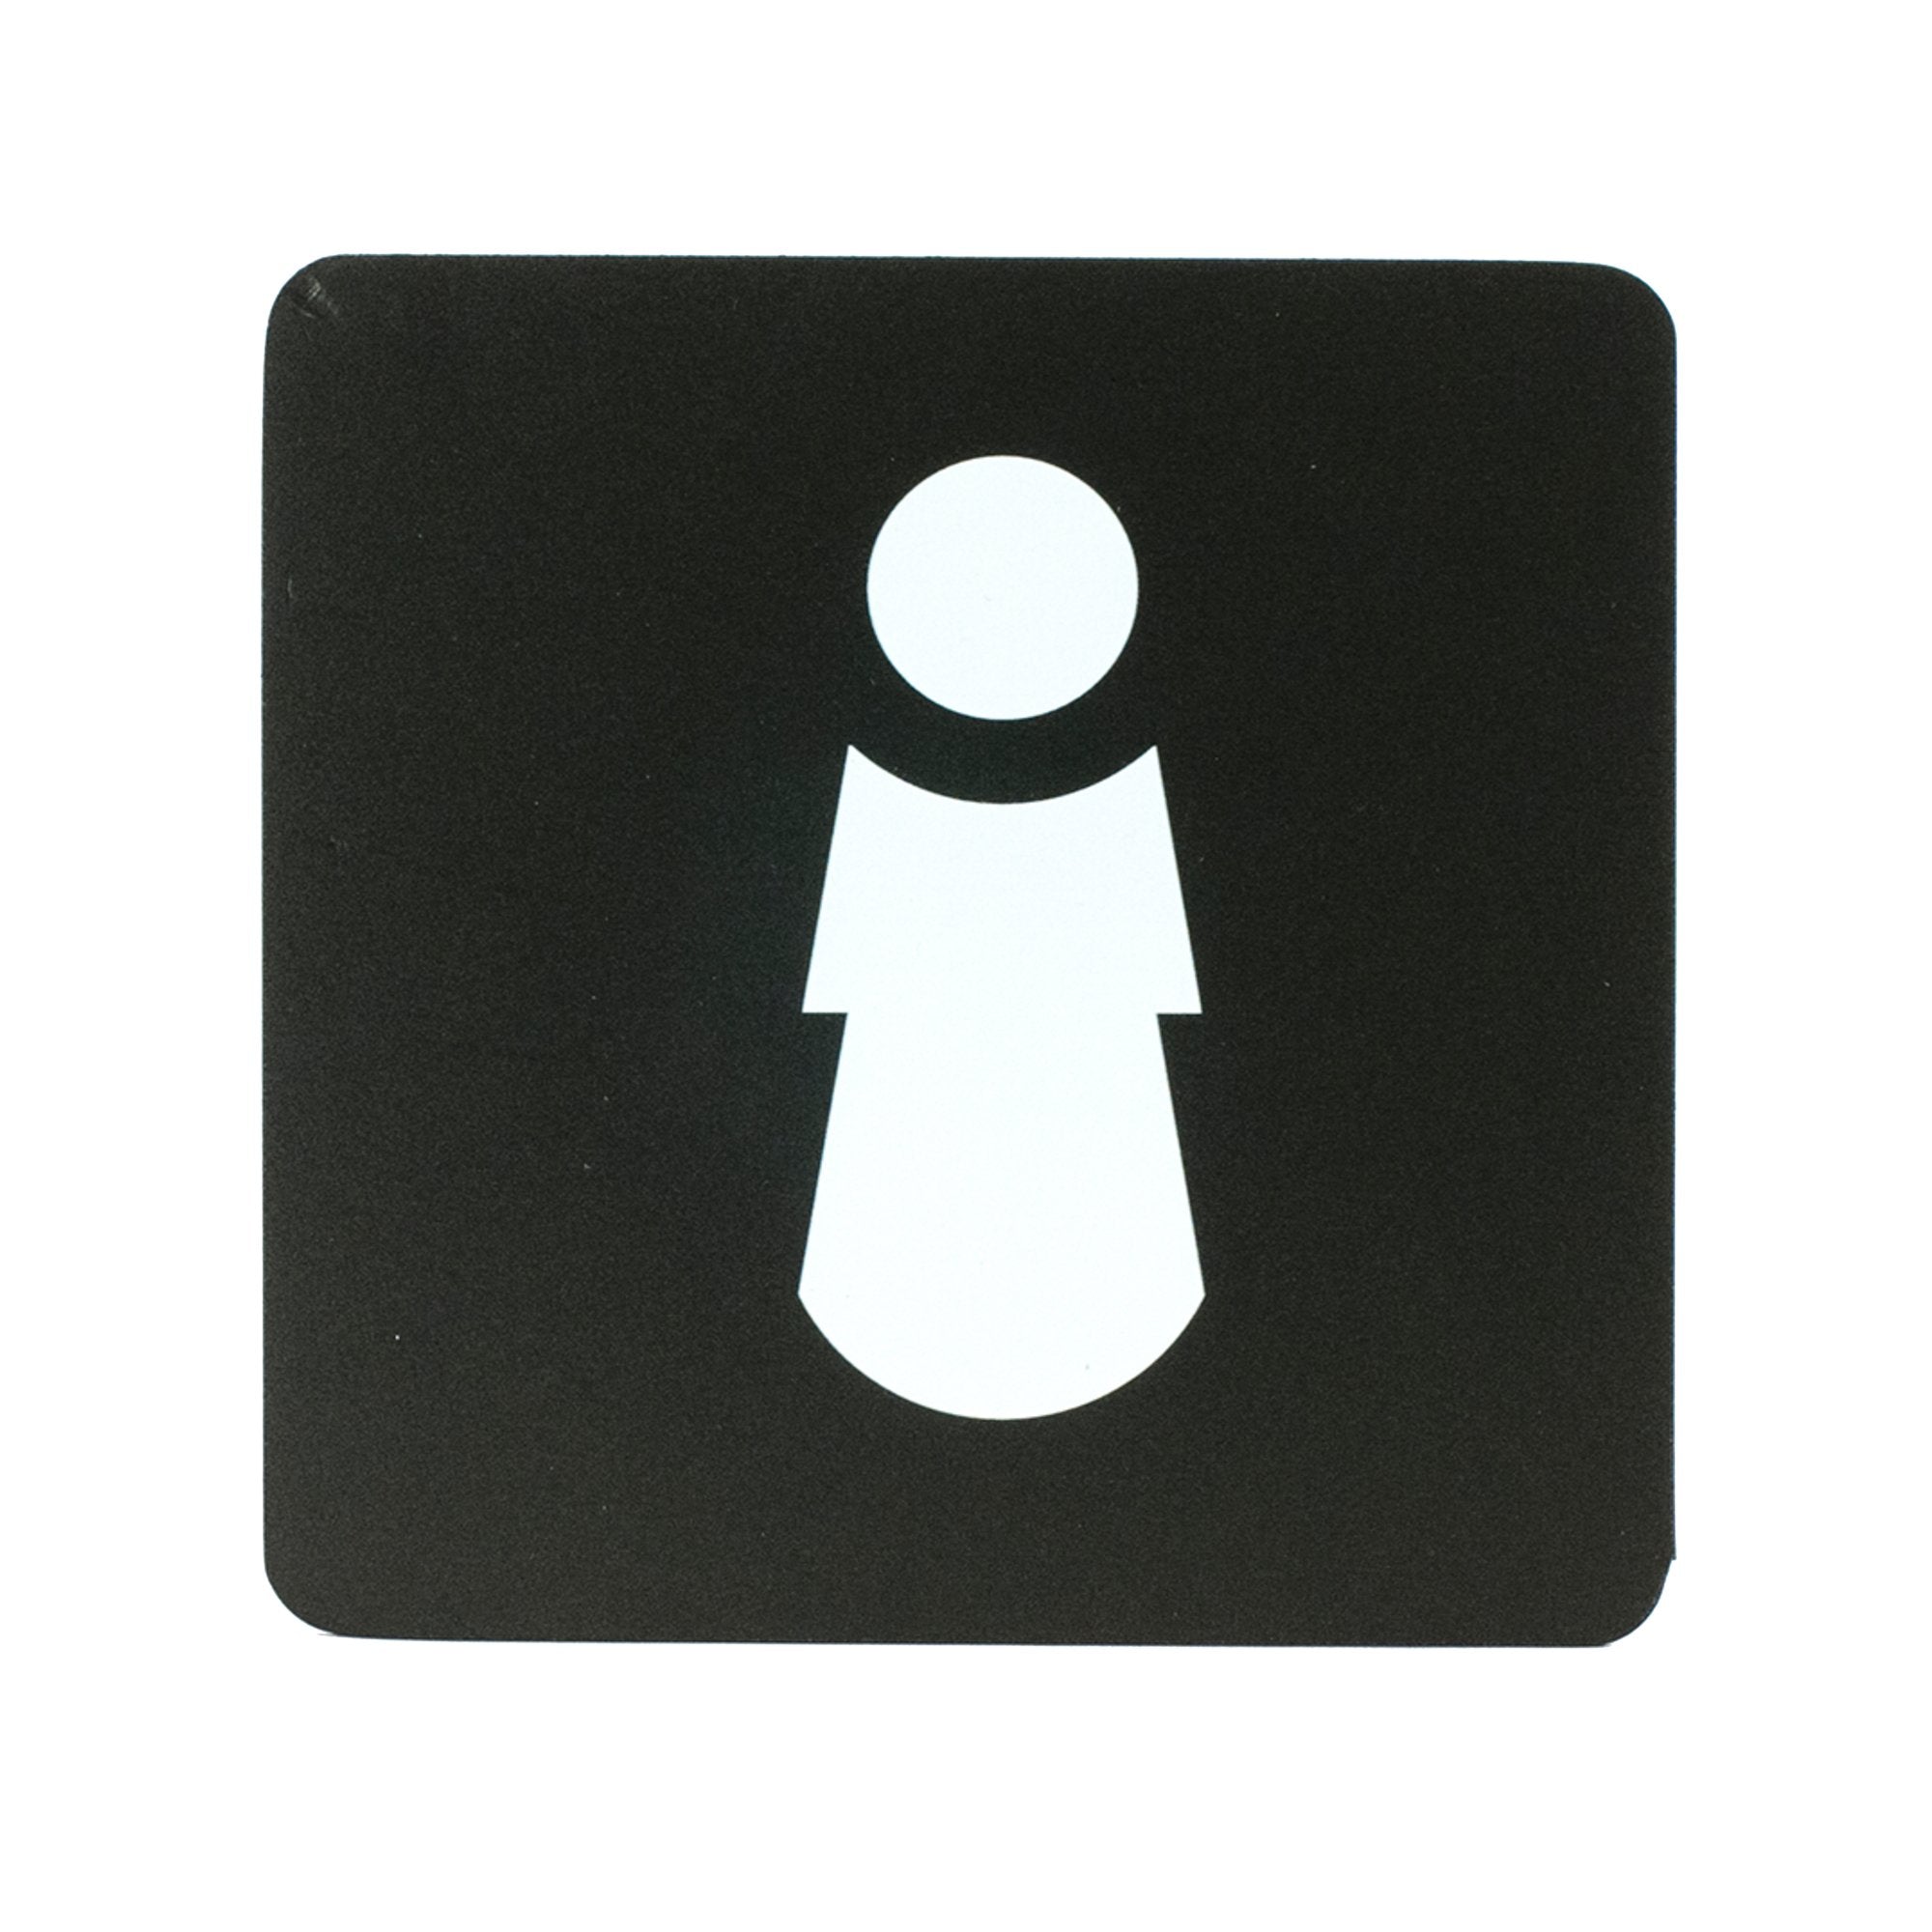 stilcasa-pittogramma-toilette-donna-16x16cm-pvc-nero-bianco